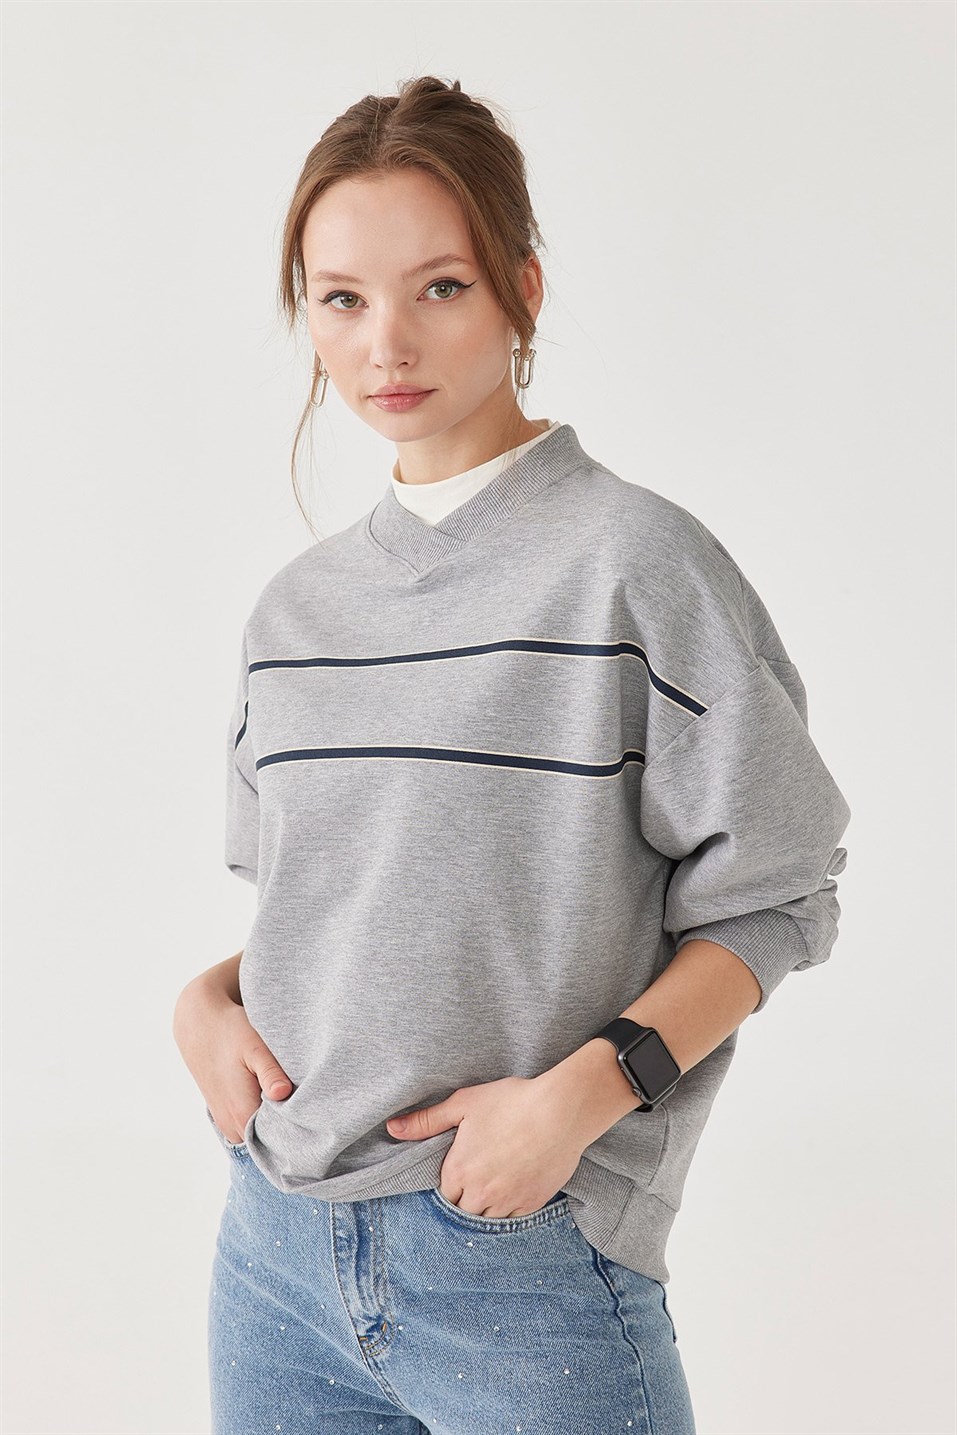 Grey Ns Cotton Sweatshirt